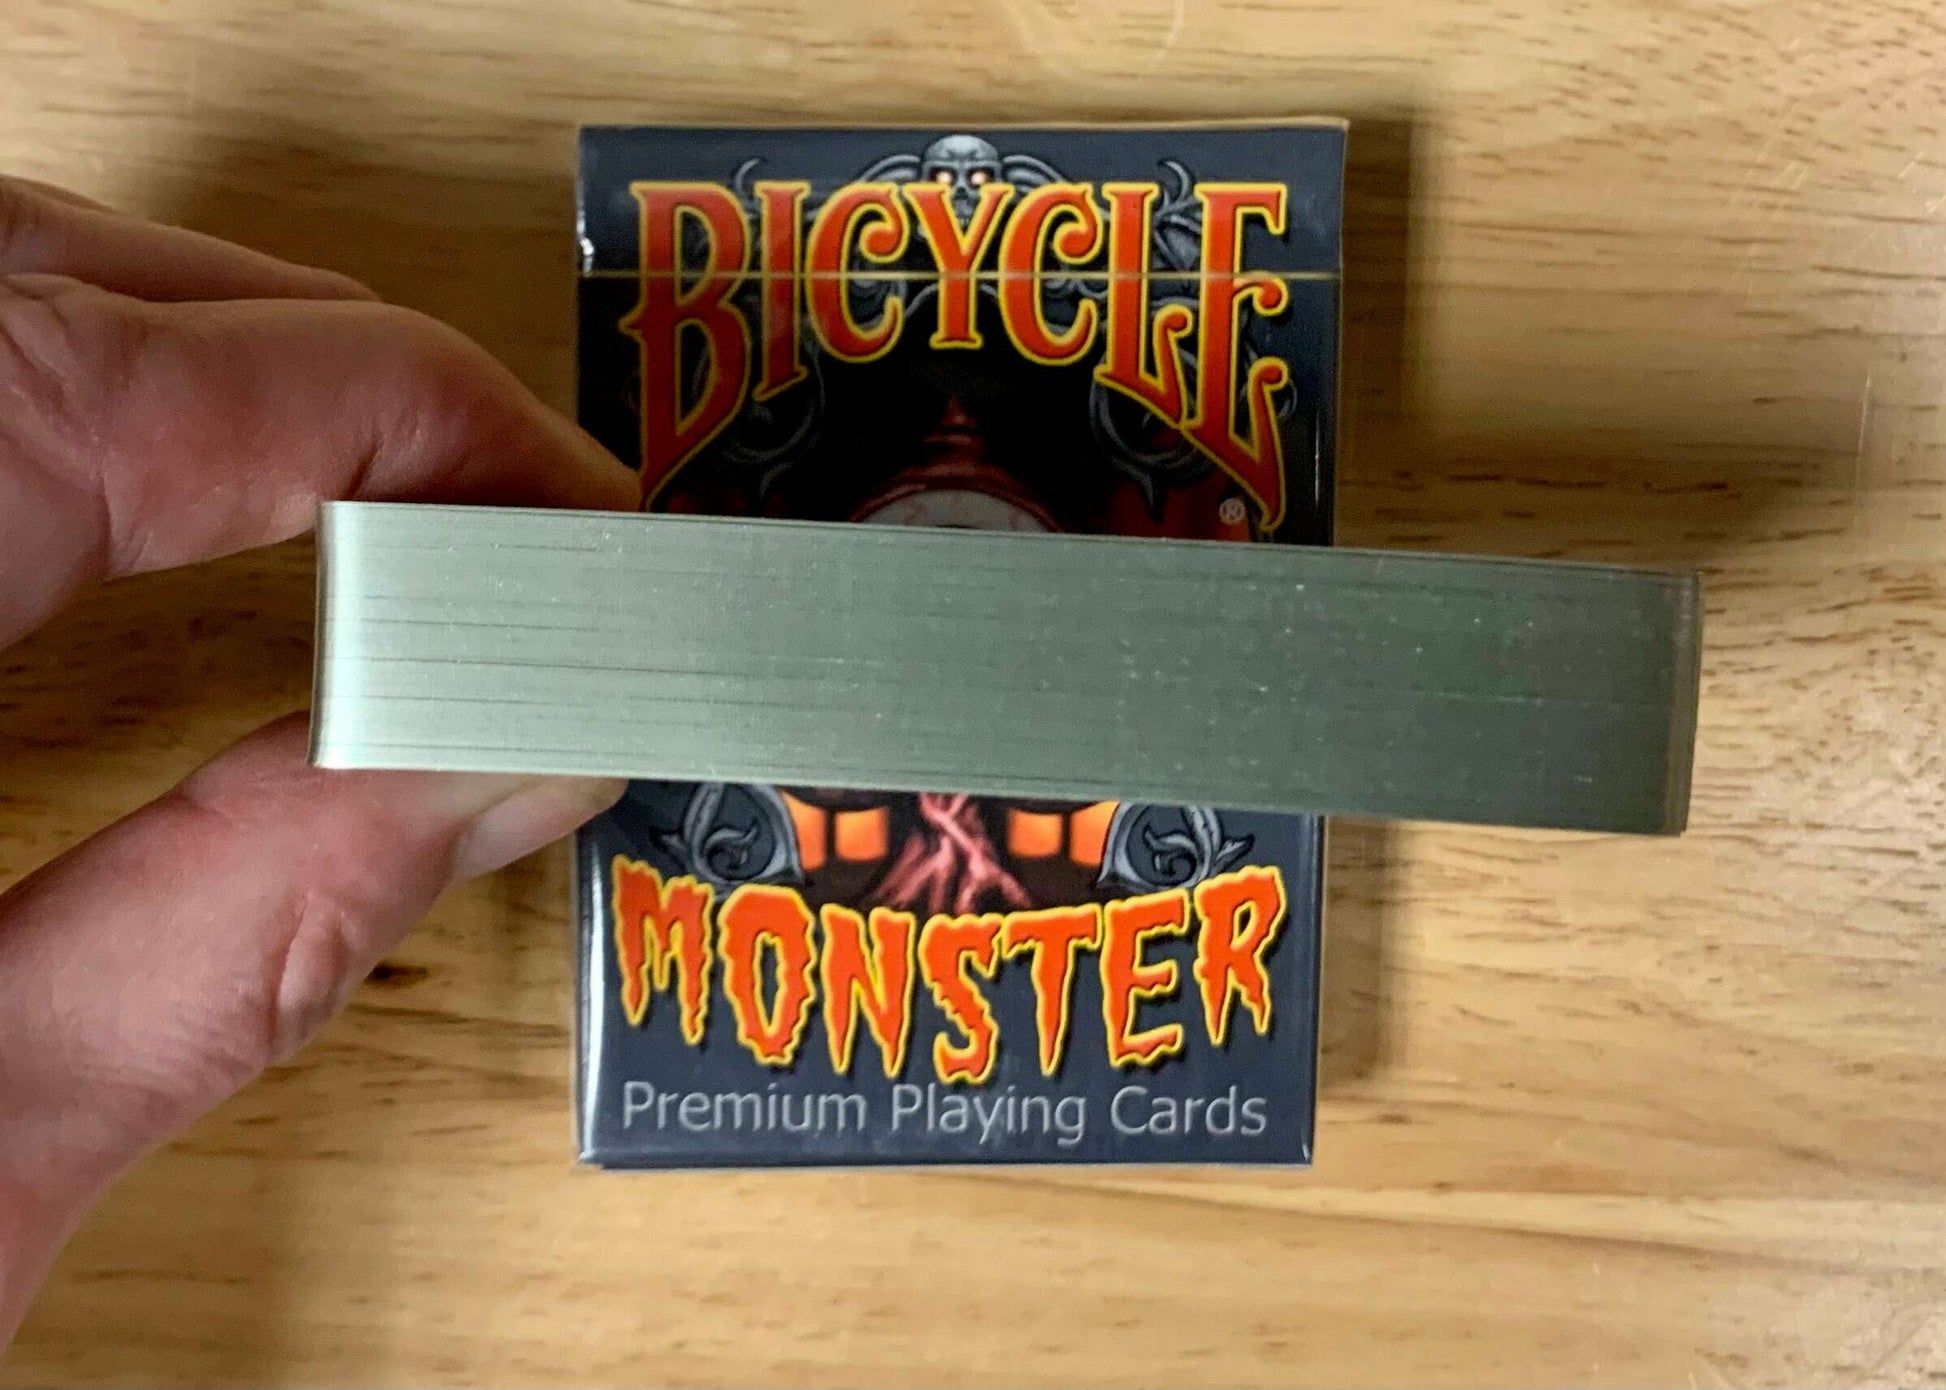 PlayingCardDecks.com-Monster v2 Gilded Bicycle Playing Cards